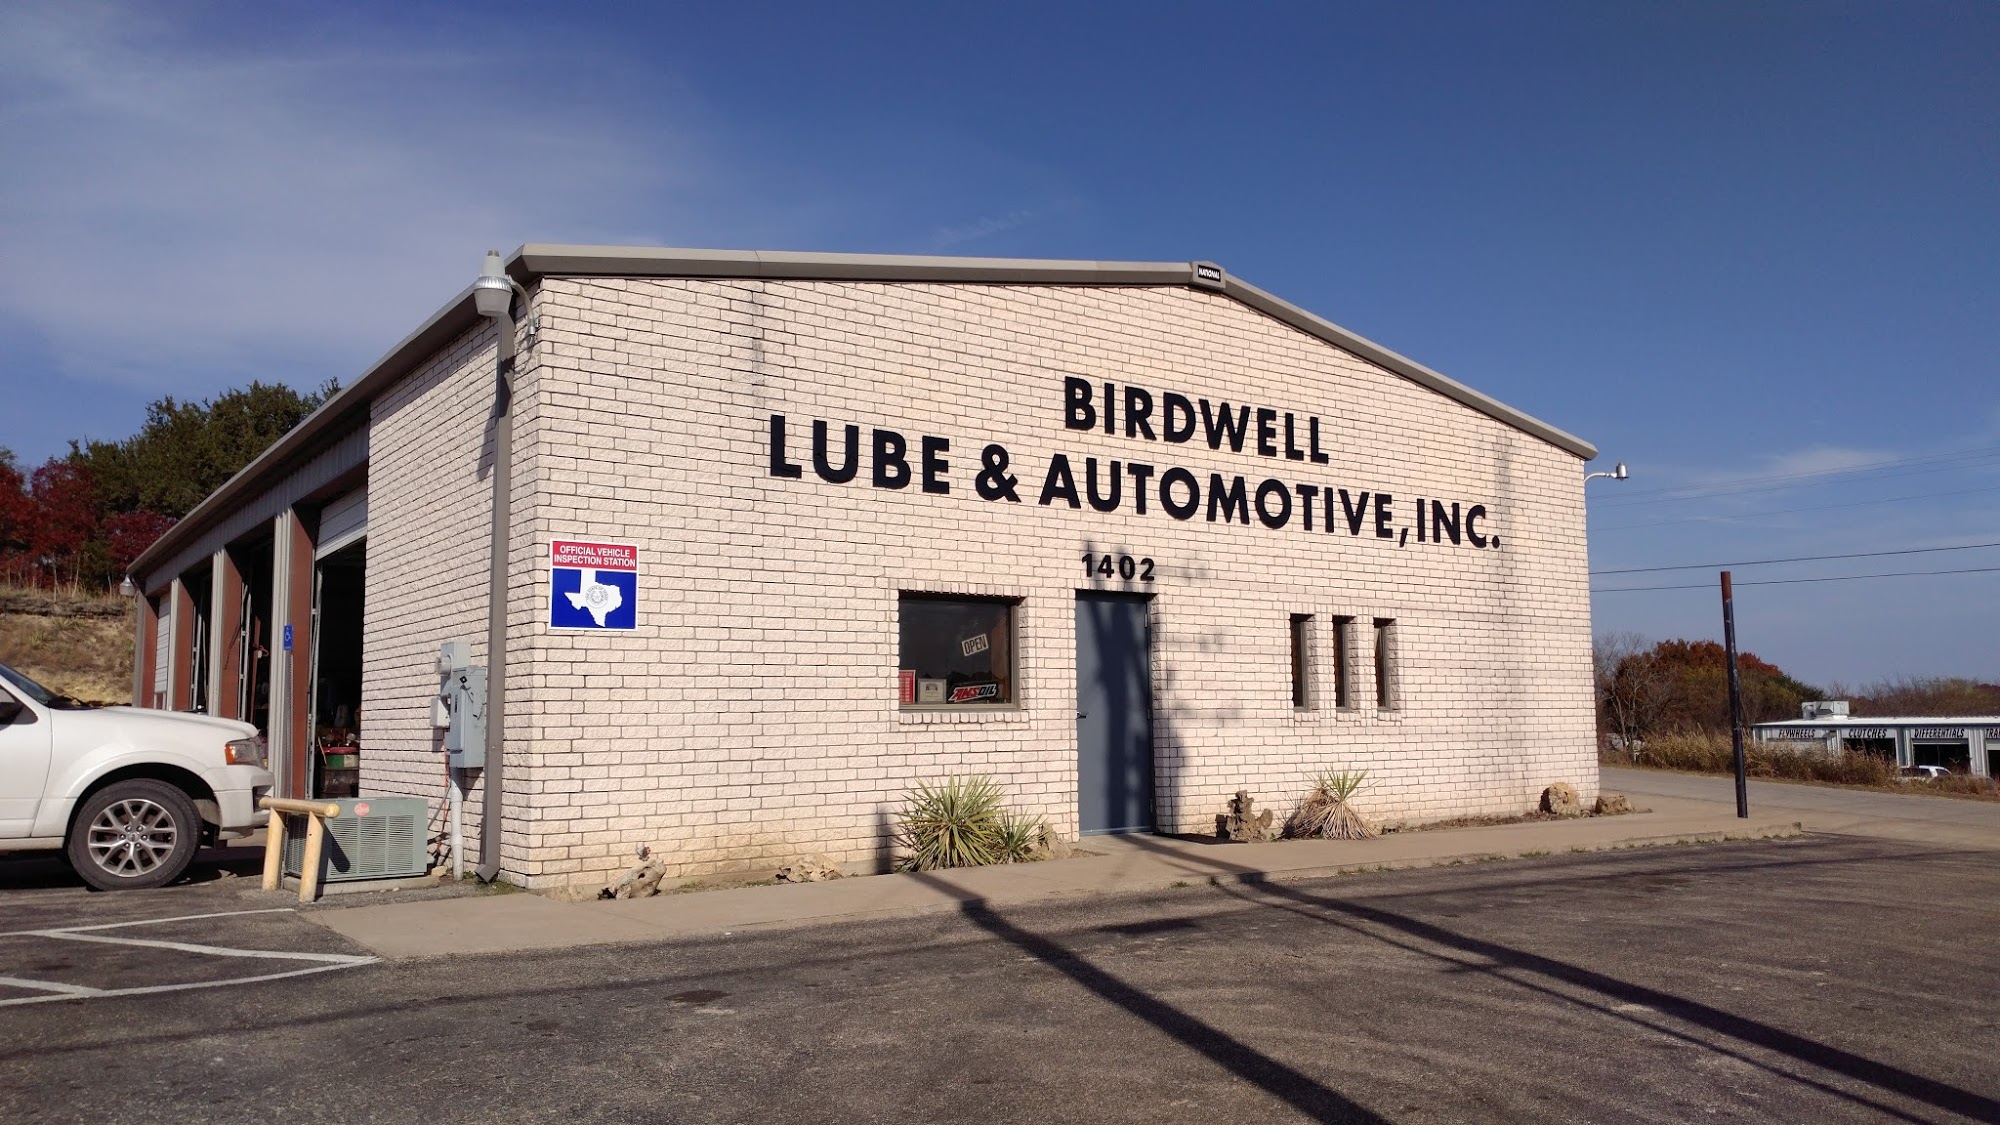 Birdwell Lube & Automotive